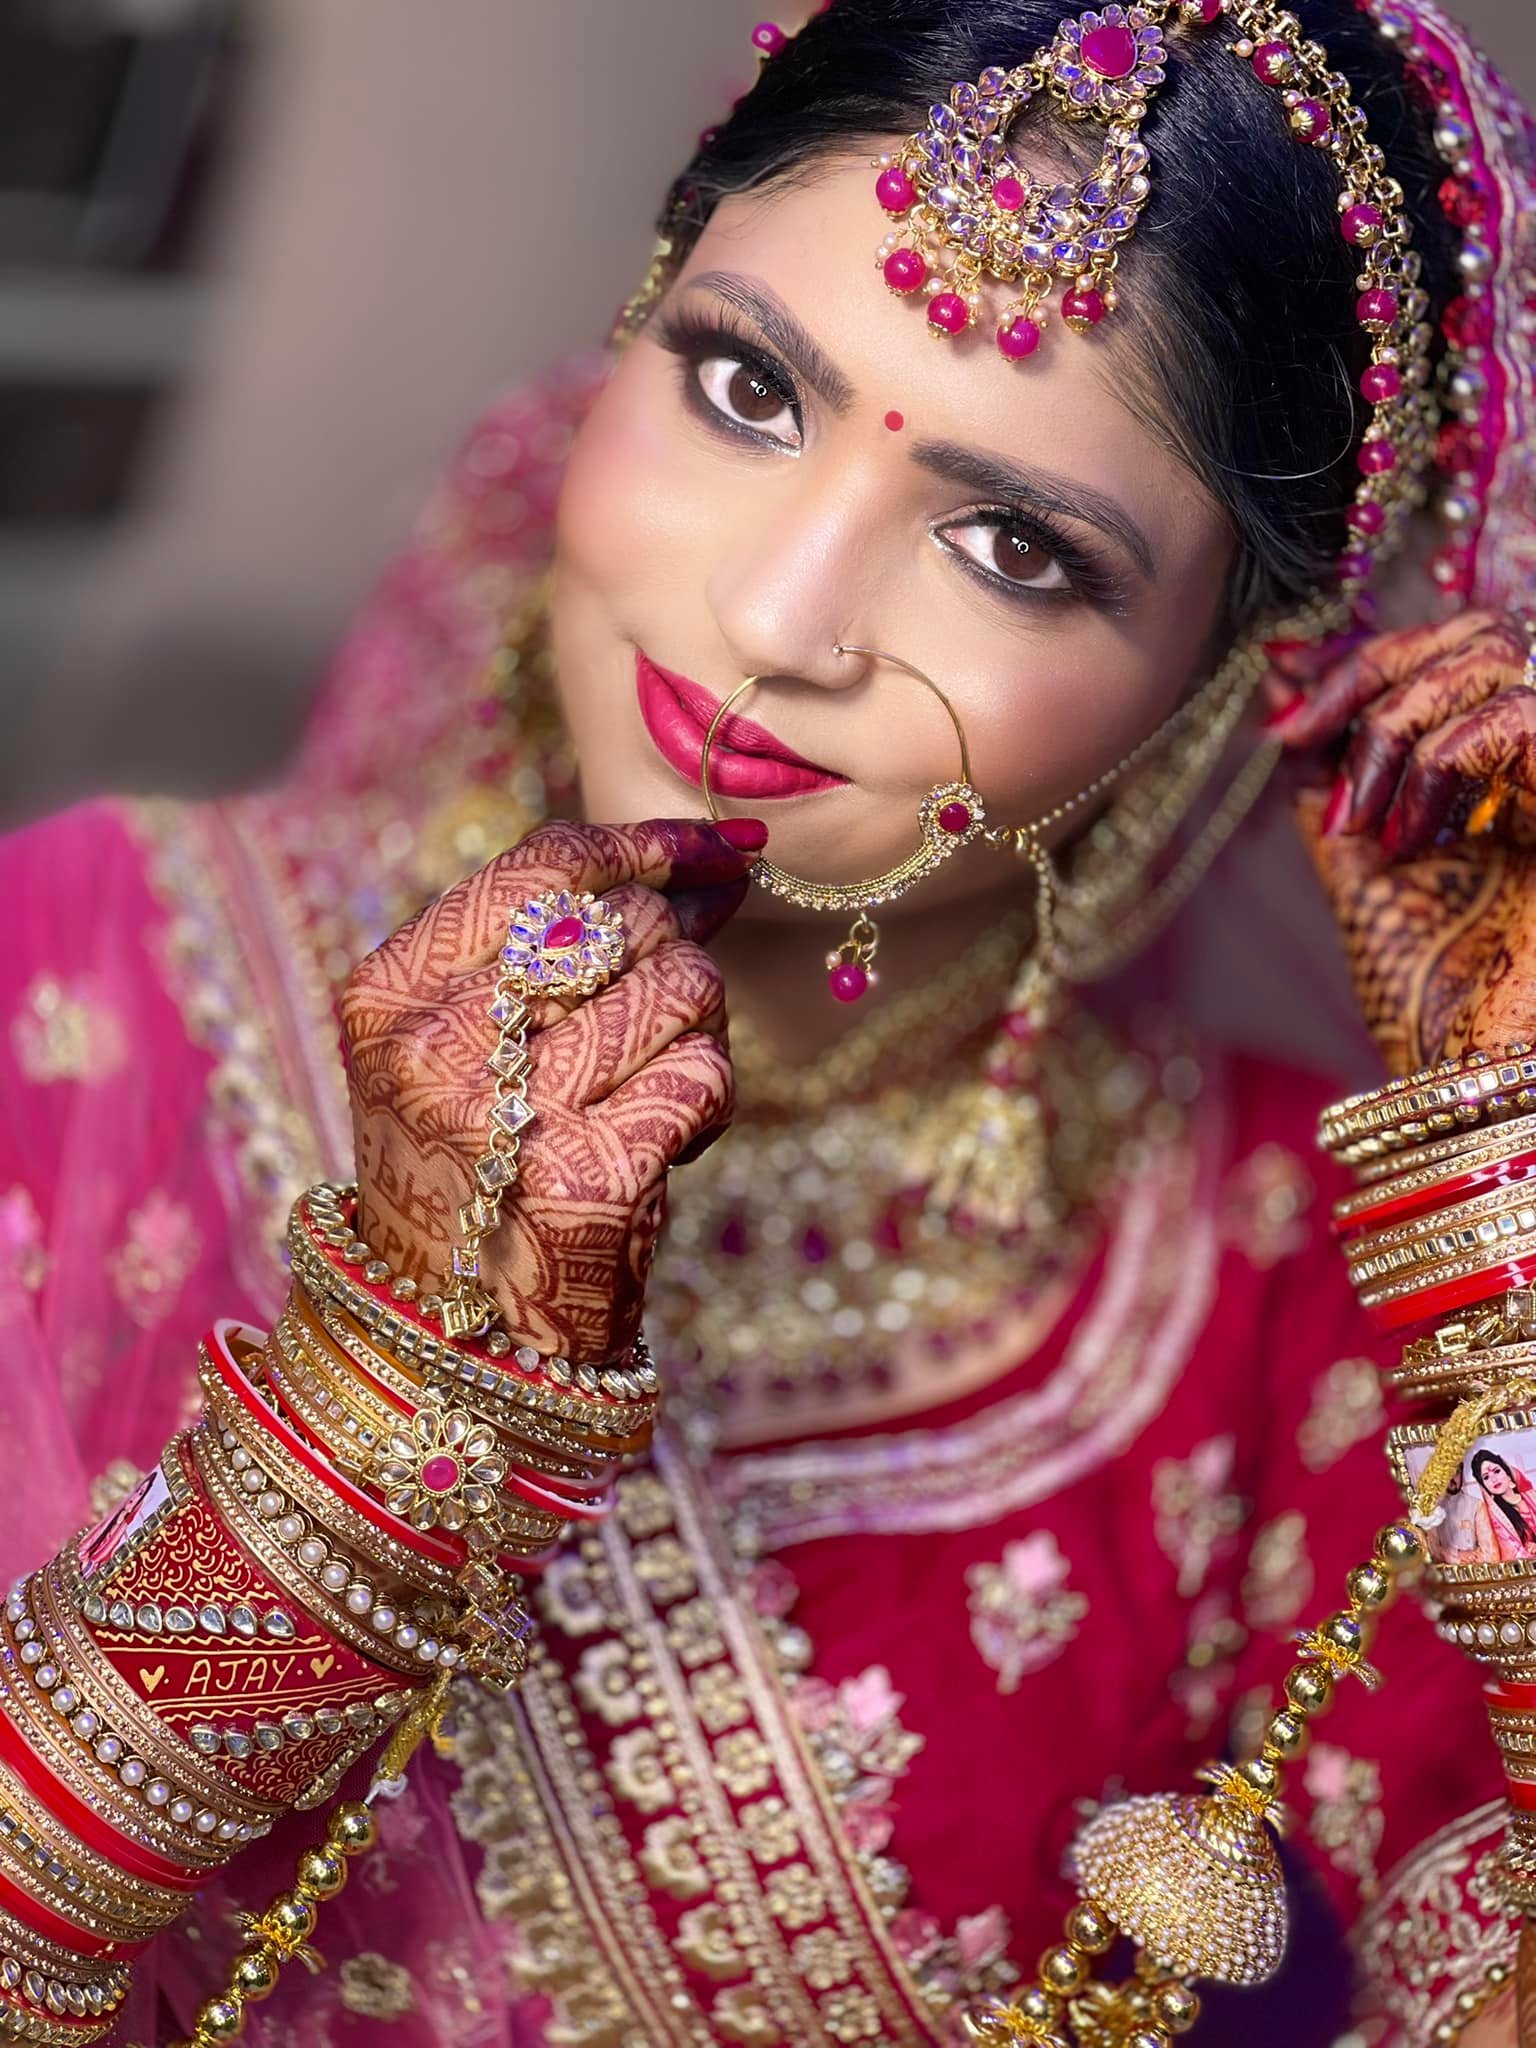 Pin by 𝙶𝚄𝚁𝙸 ♥ on ʙʀɪᴅᴀʟ☆ | Indian bridal dress, Indian wedding  photography poses, Indian bridal photos